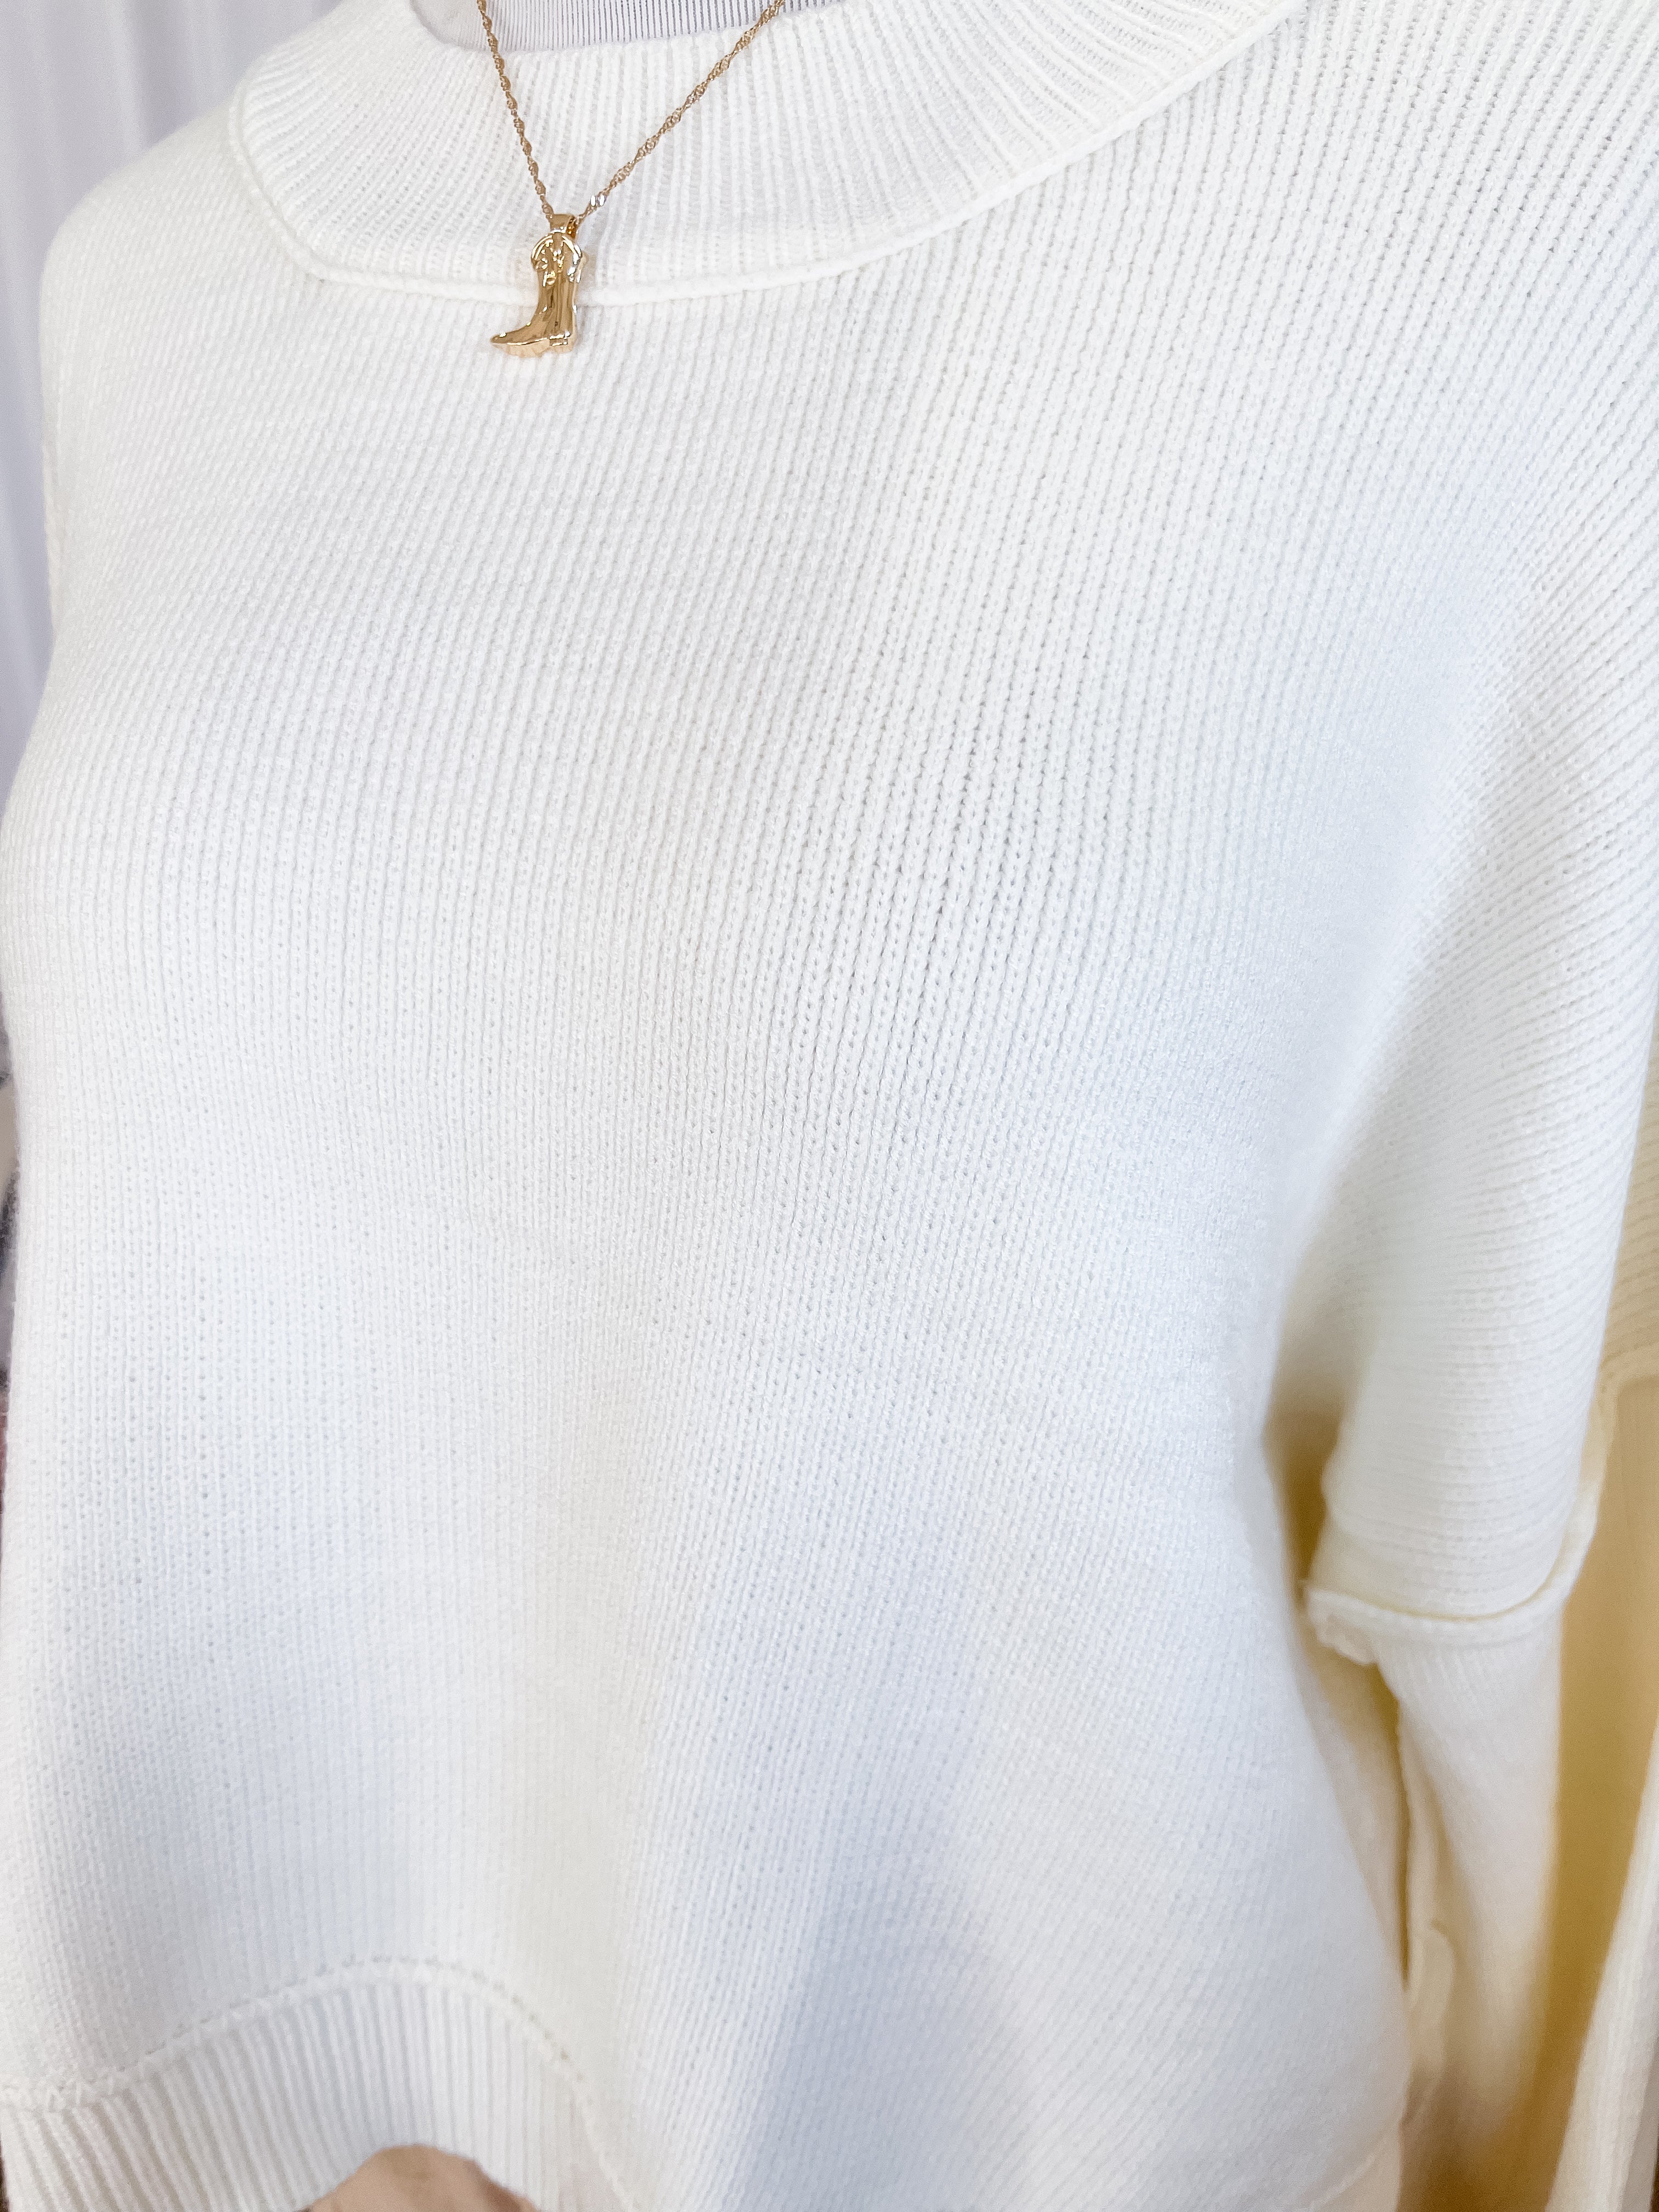 Spring Breeze White Crop Sweater